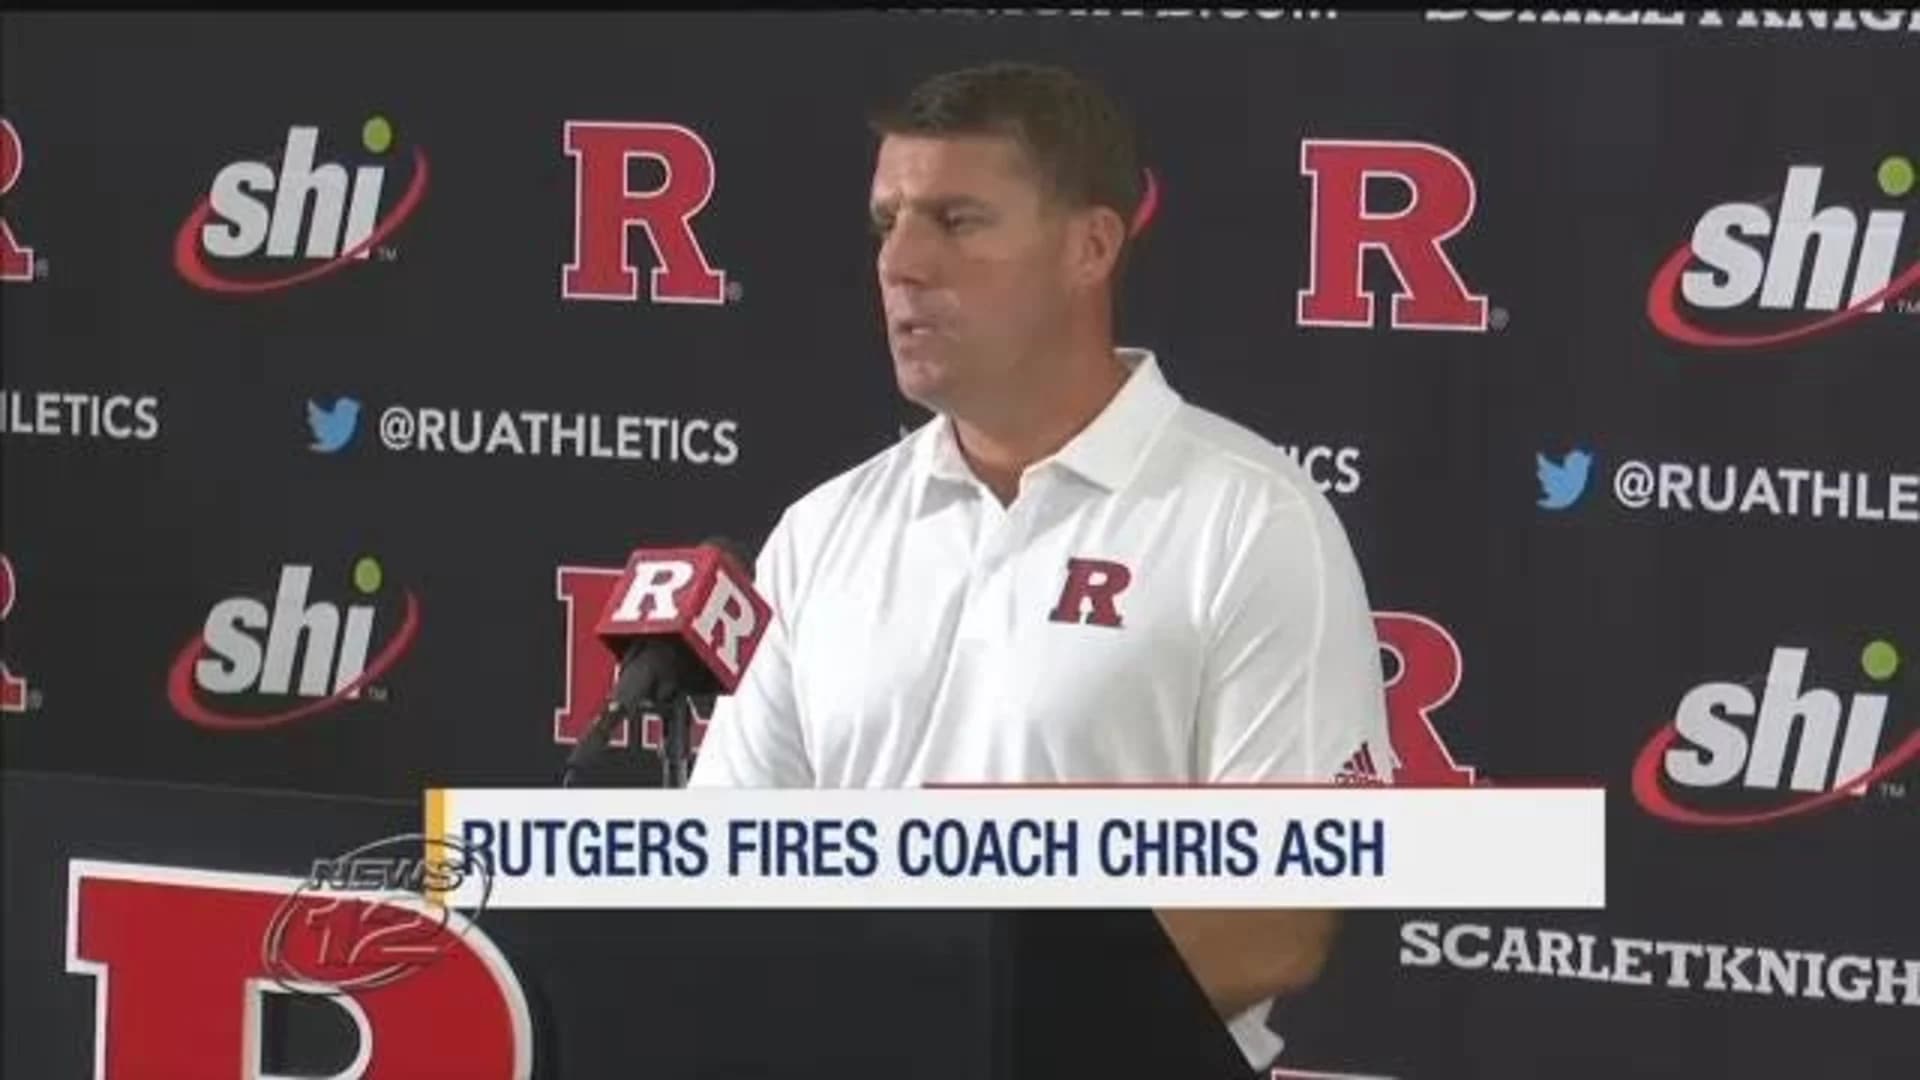 Rutgers fires head coach Chris Ash 4 games into season